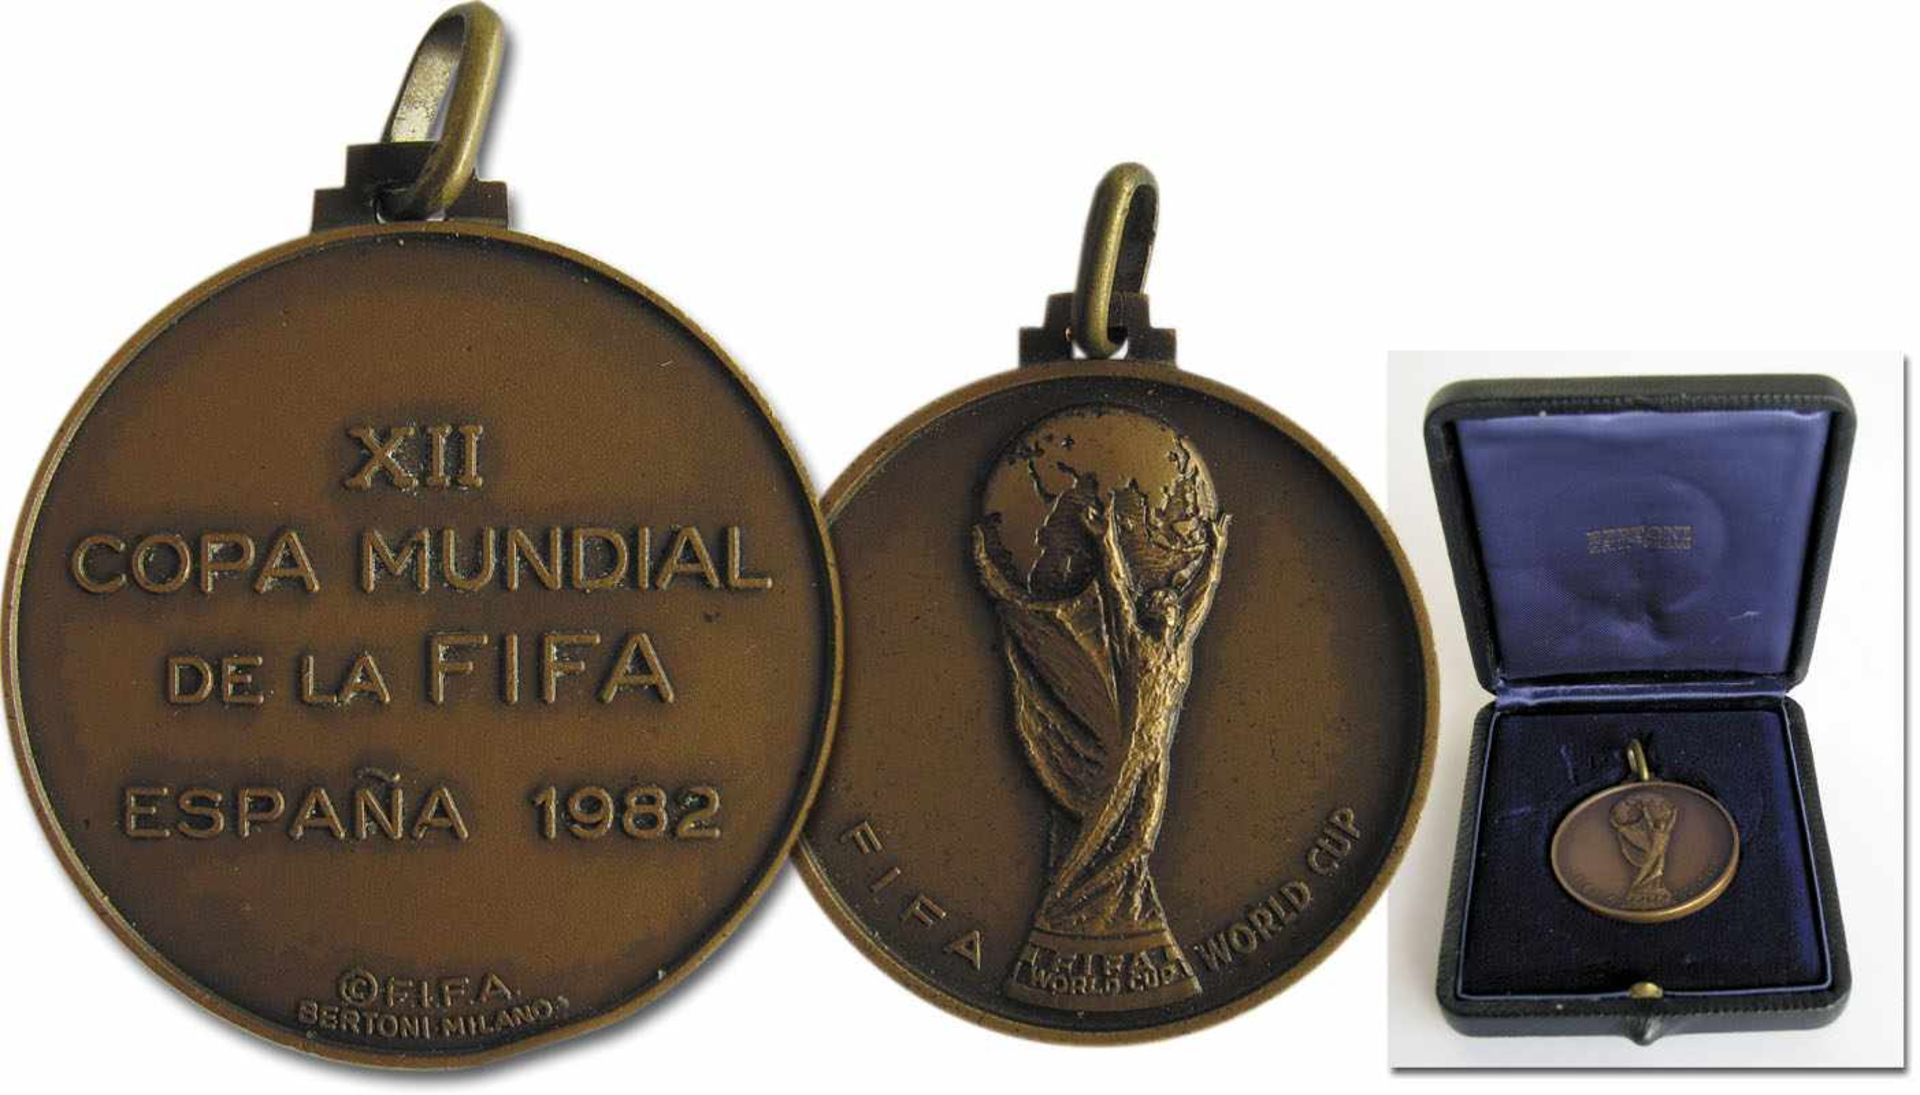 World Cup 1982 FIFA Winner Medal Runners up medal - Original runner-up medal of teh Football World